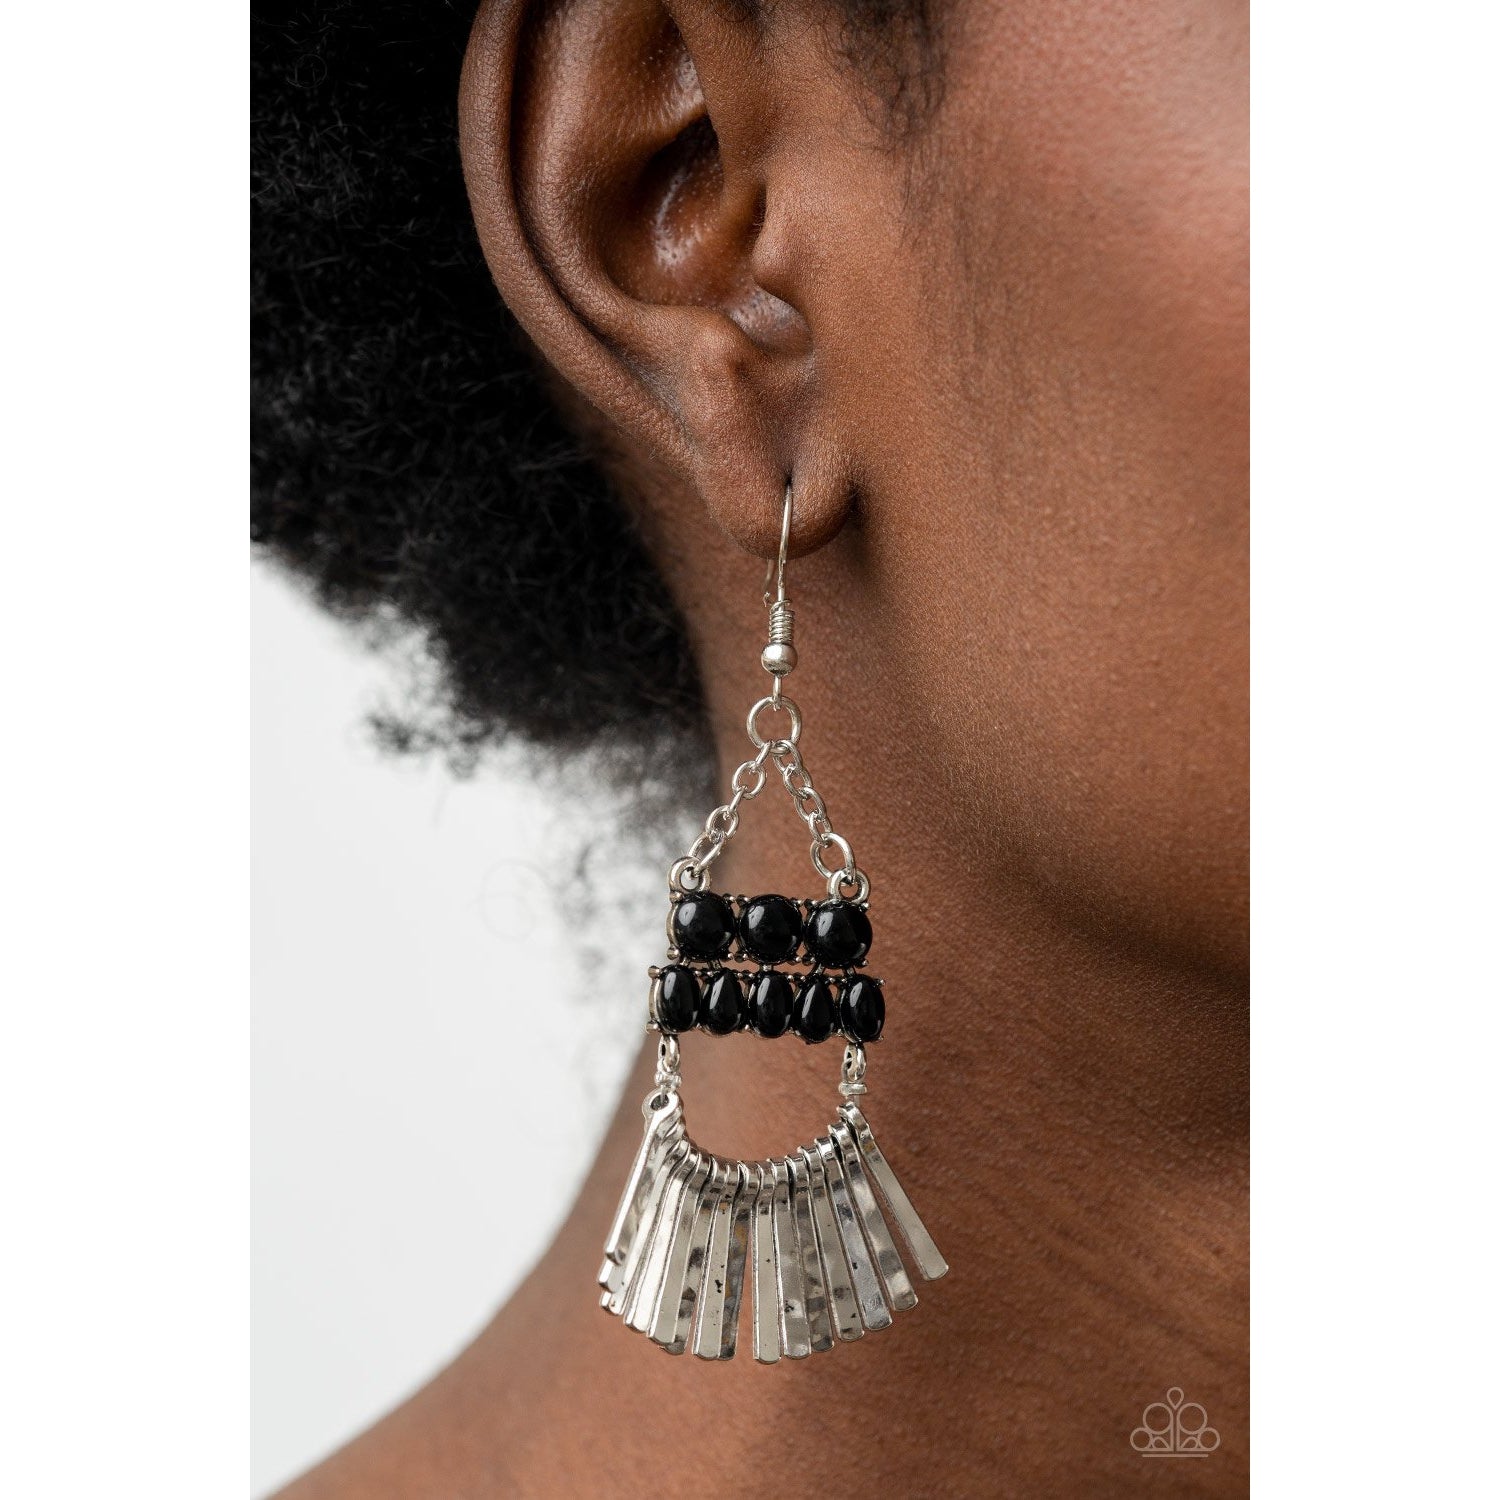 A FLARE For Fierceness - Black Earrings - Paparazzi Accessories - GlaMarous Titi Jewels